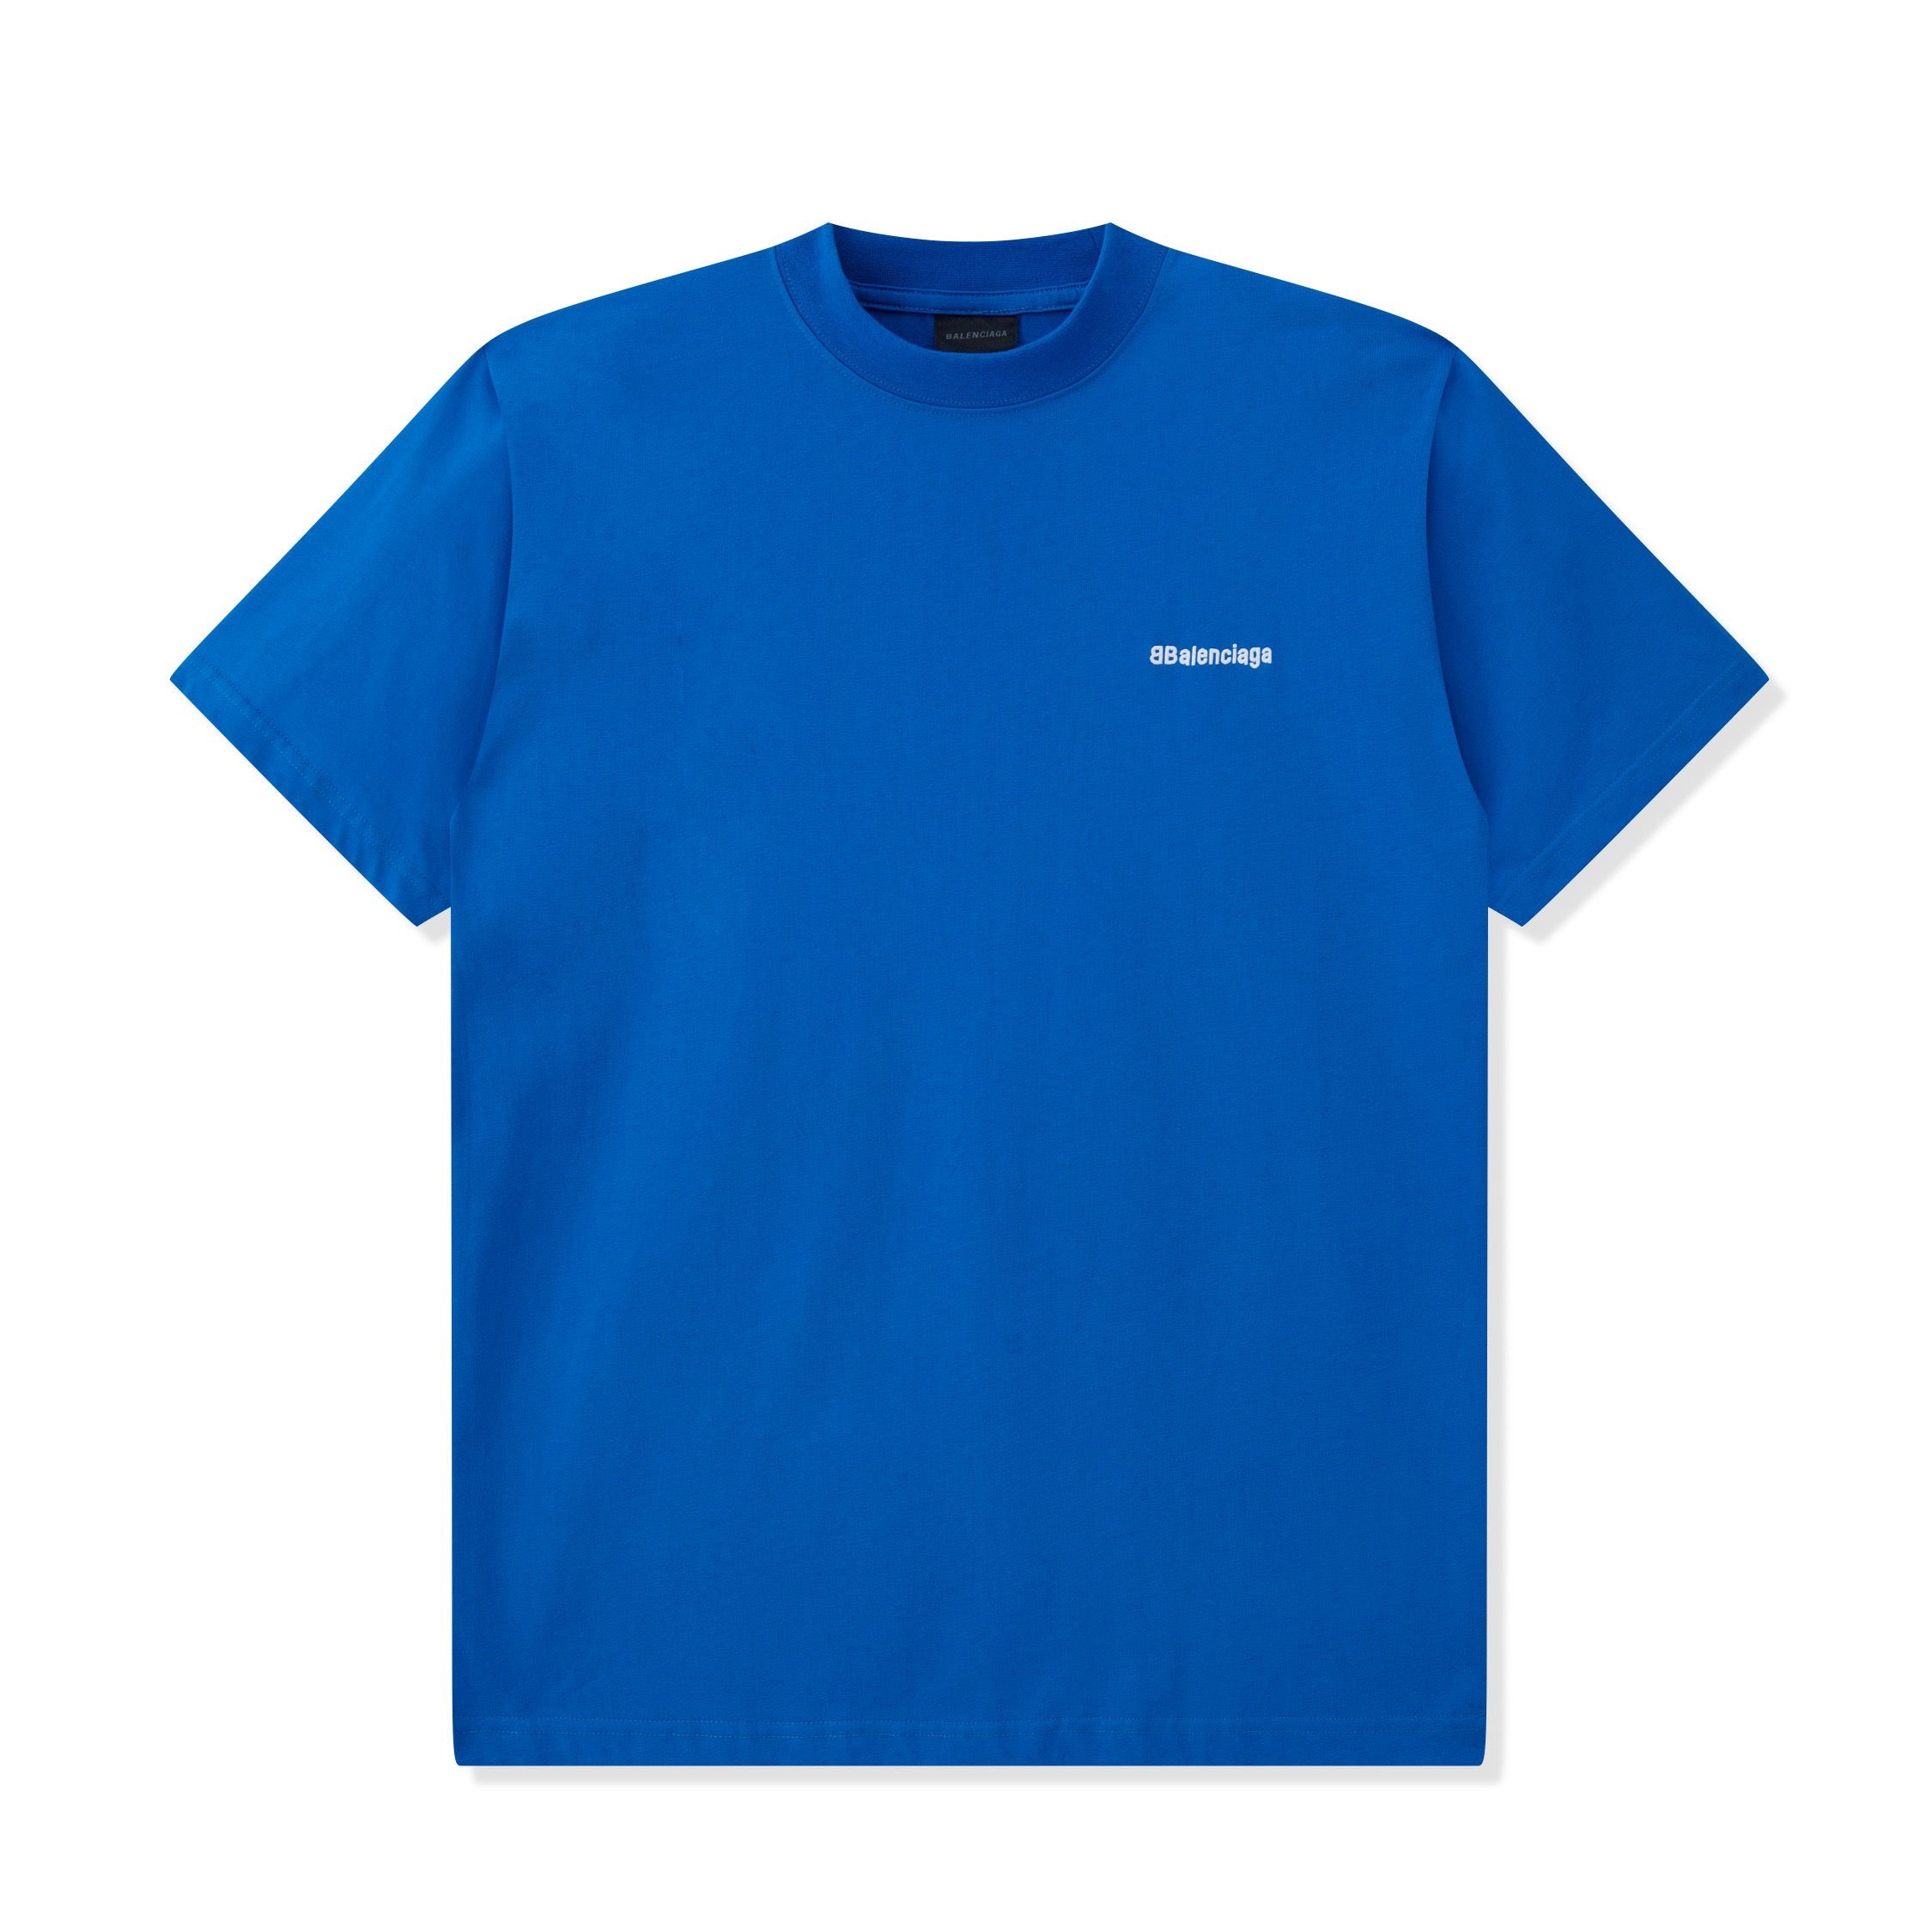 Black,Grey,Blue and Sky blue T-shirt